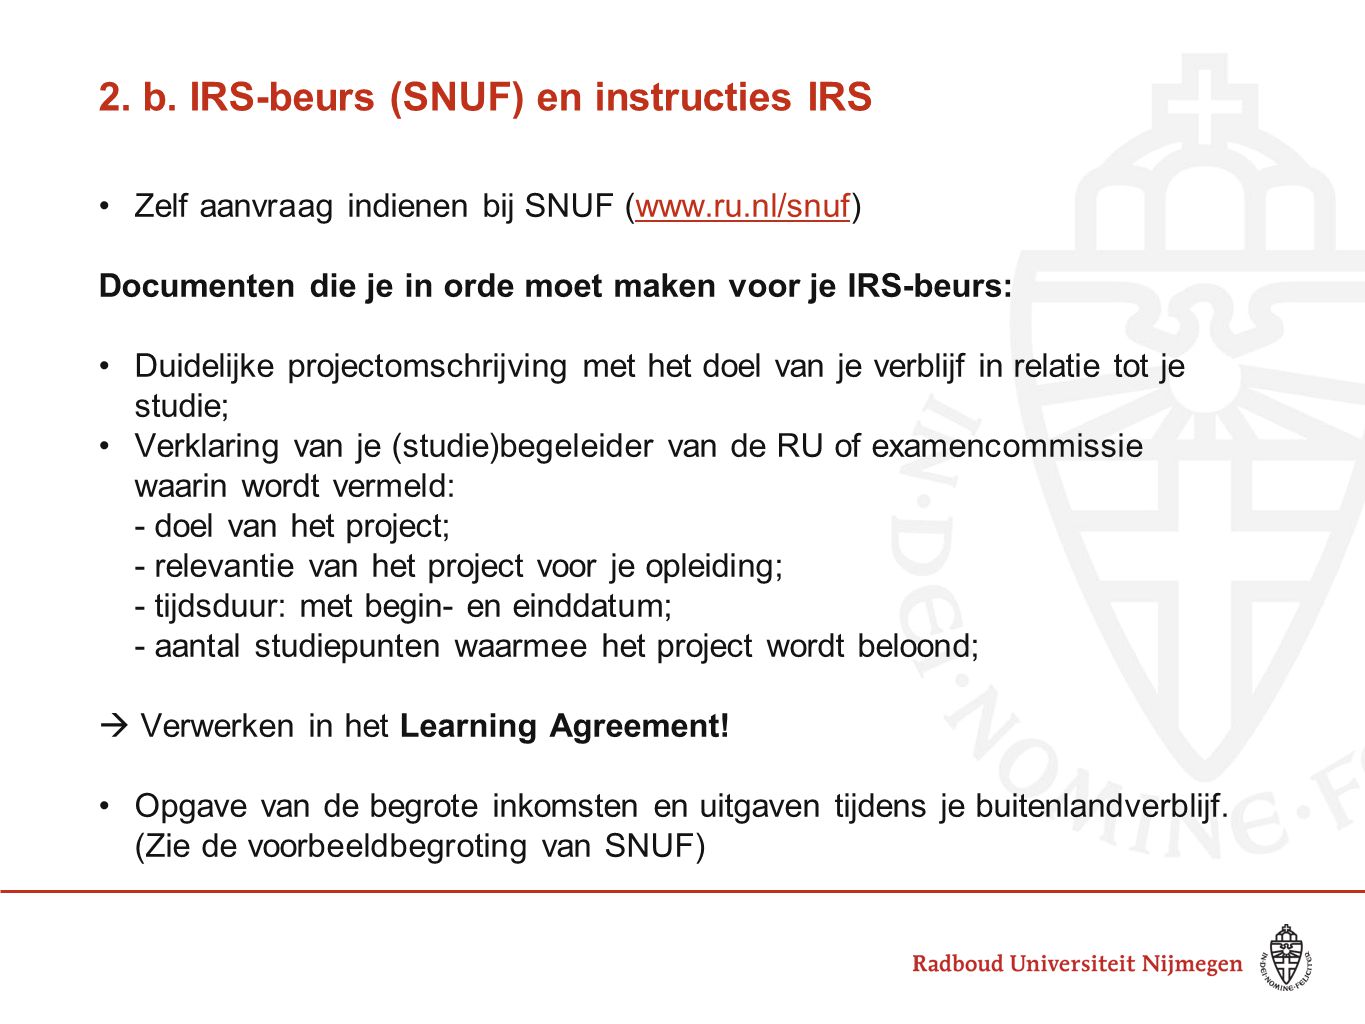 2. b. IRS-beurs (SNUF) en instructies IRS